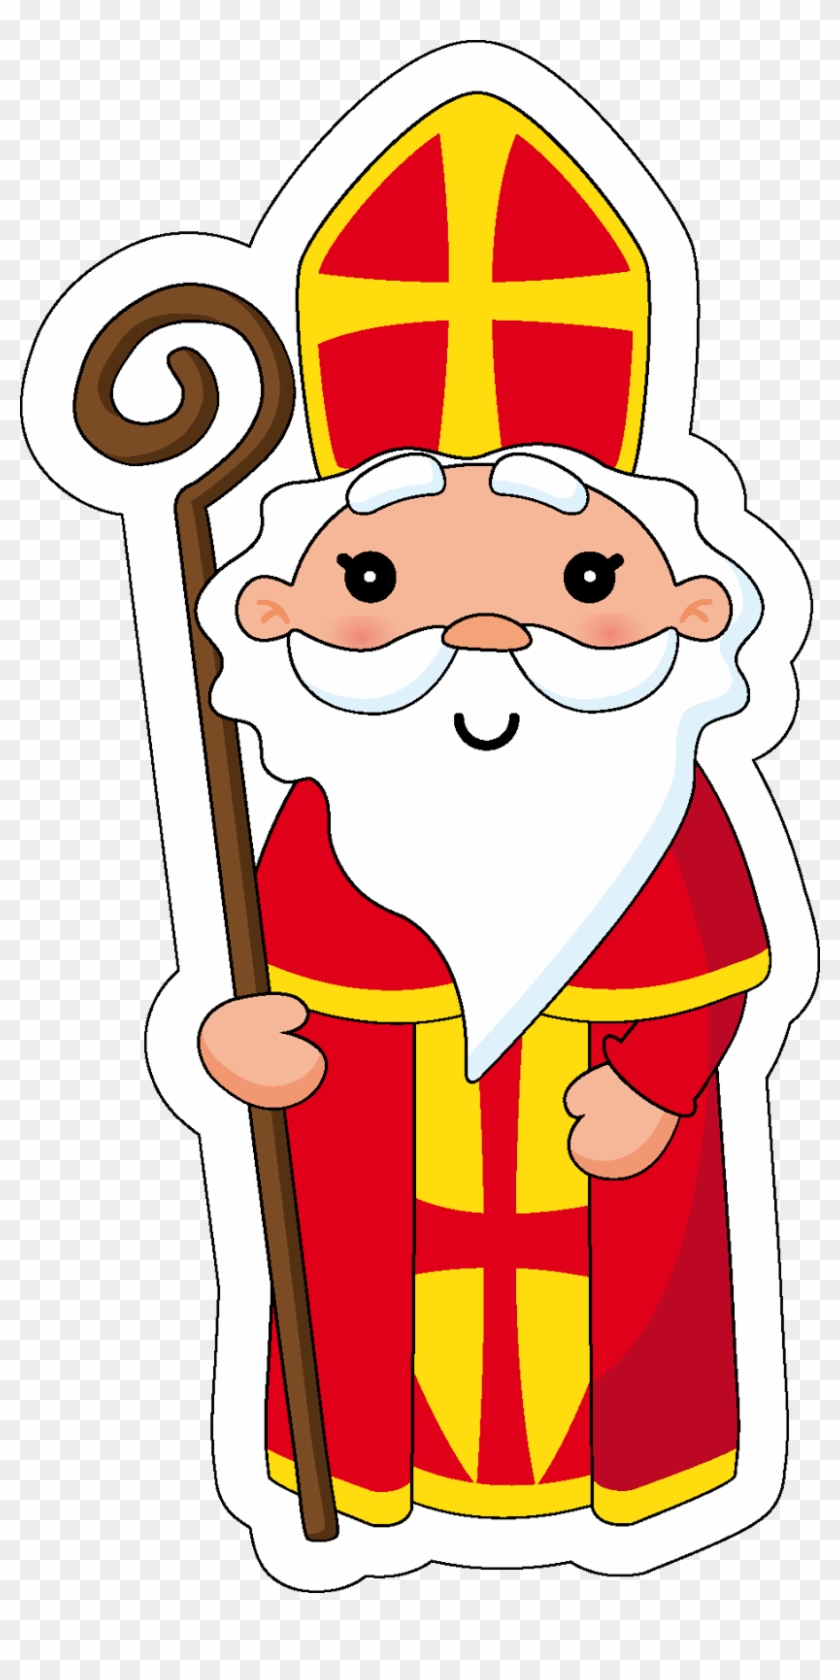 Santa Claus Bredele Saint Nicholas Day Christmas December - Santa Claus Bredele Saint Nicholas Day Christmas December #509748